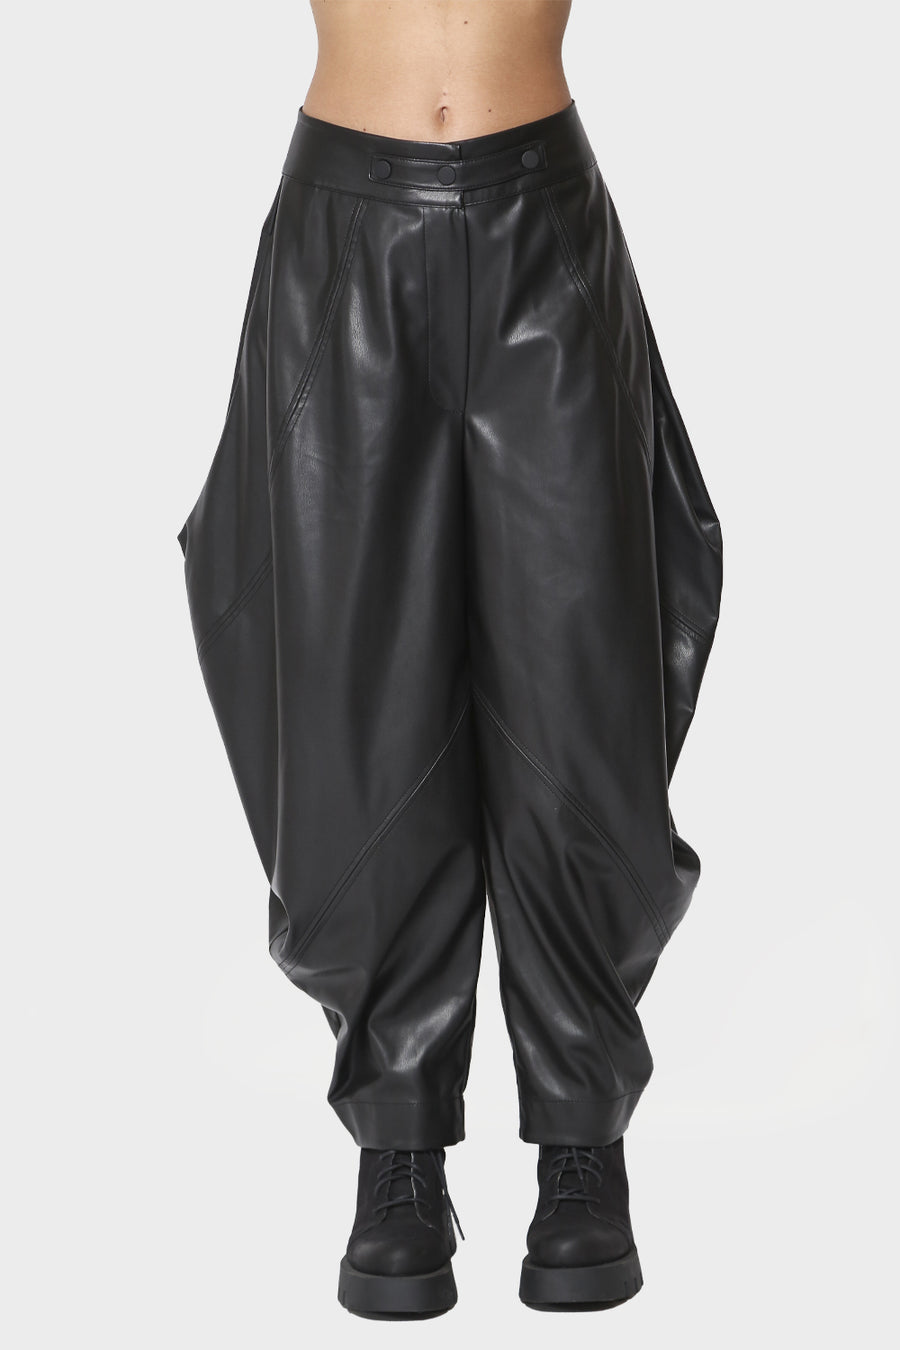 Pantalone Nu Black in ecopelle nero K23 13018